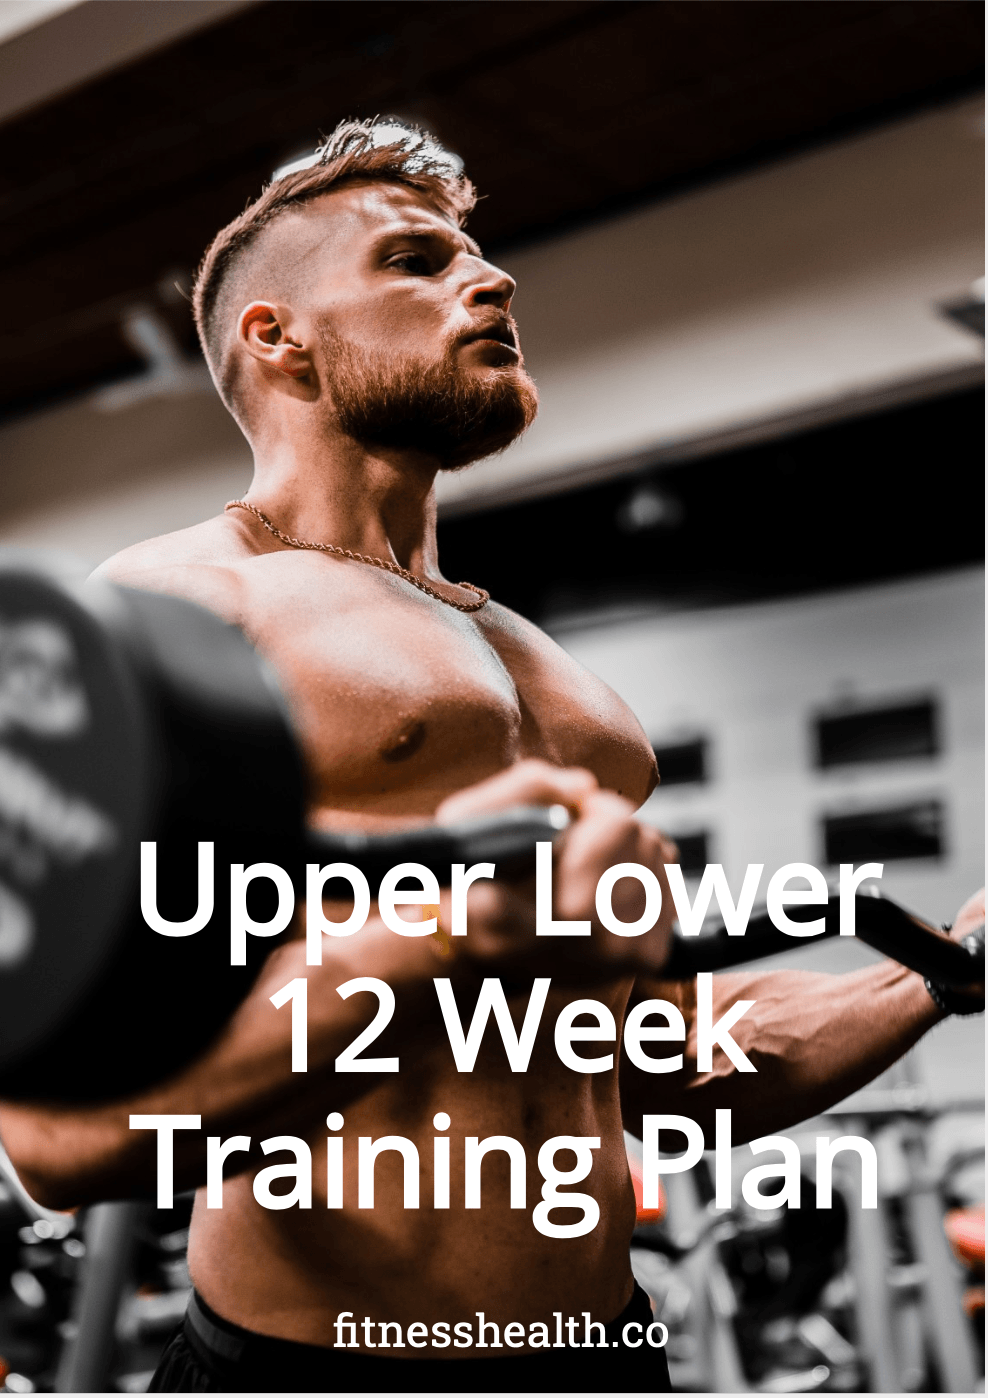 Upper Lower 12 Week Workout Training Plan Ebook - Fitness Health 